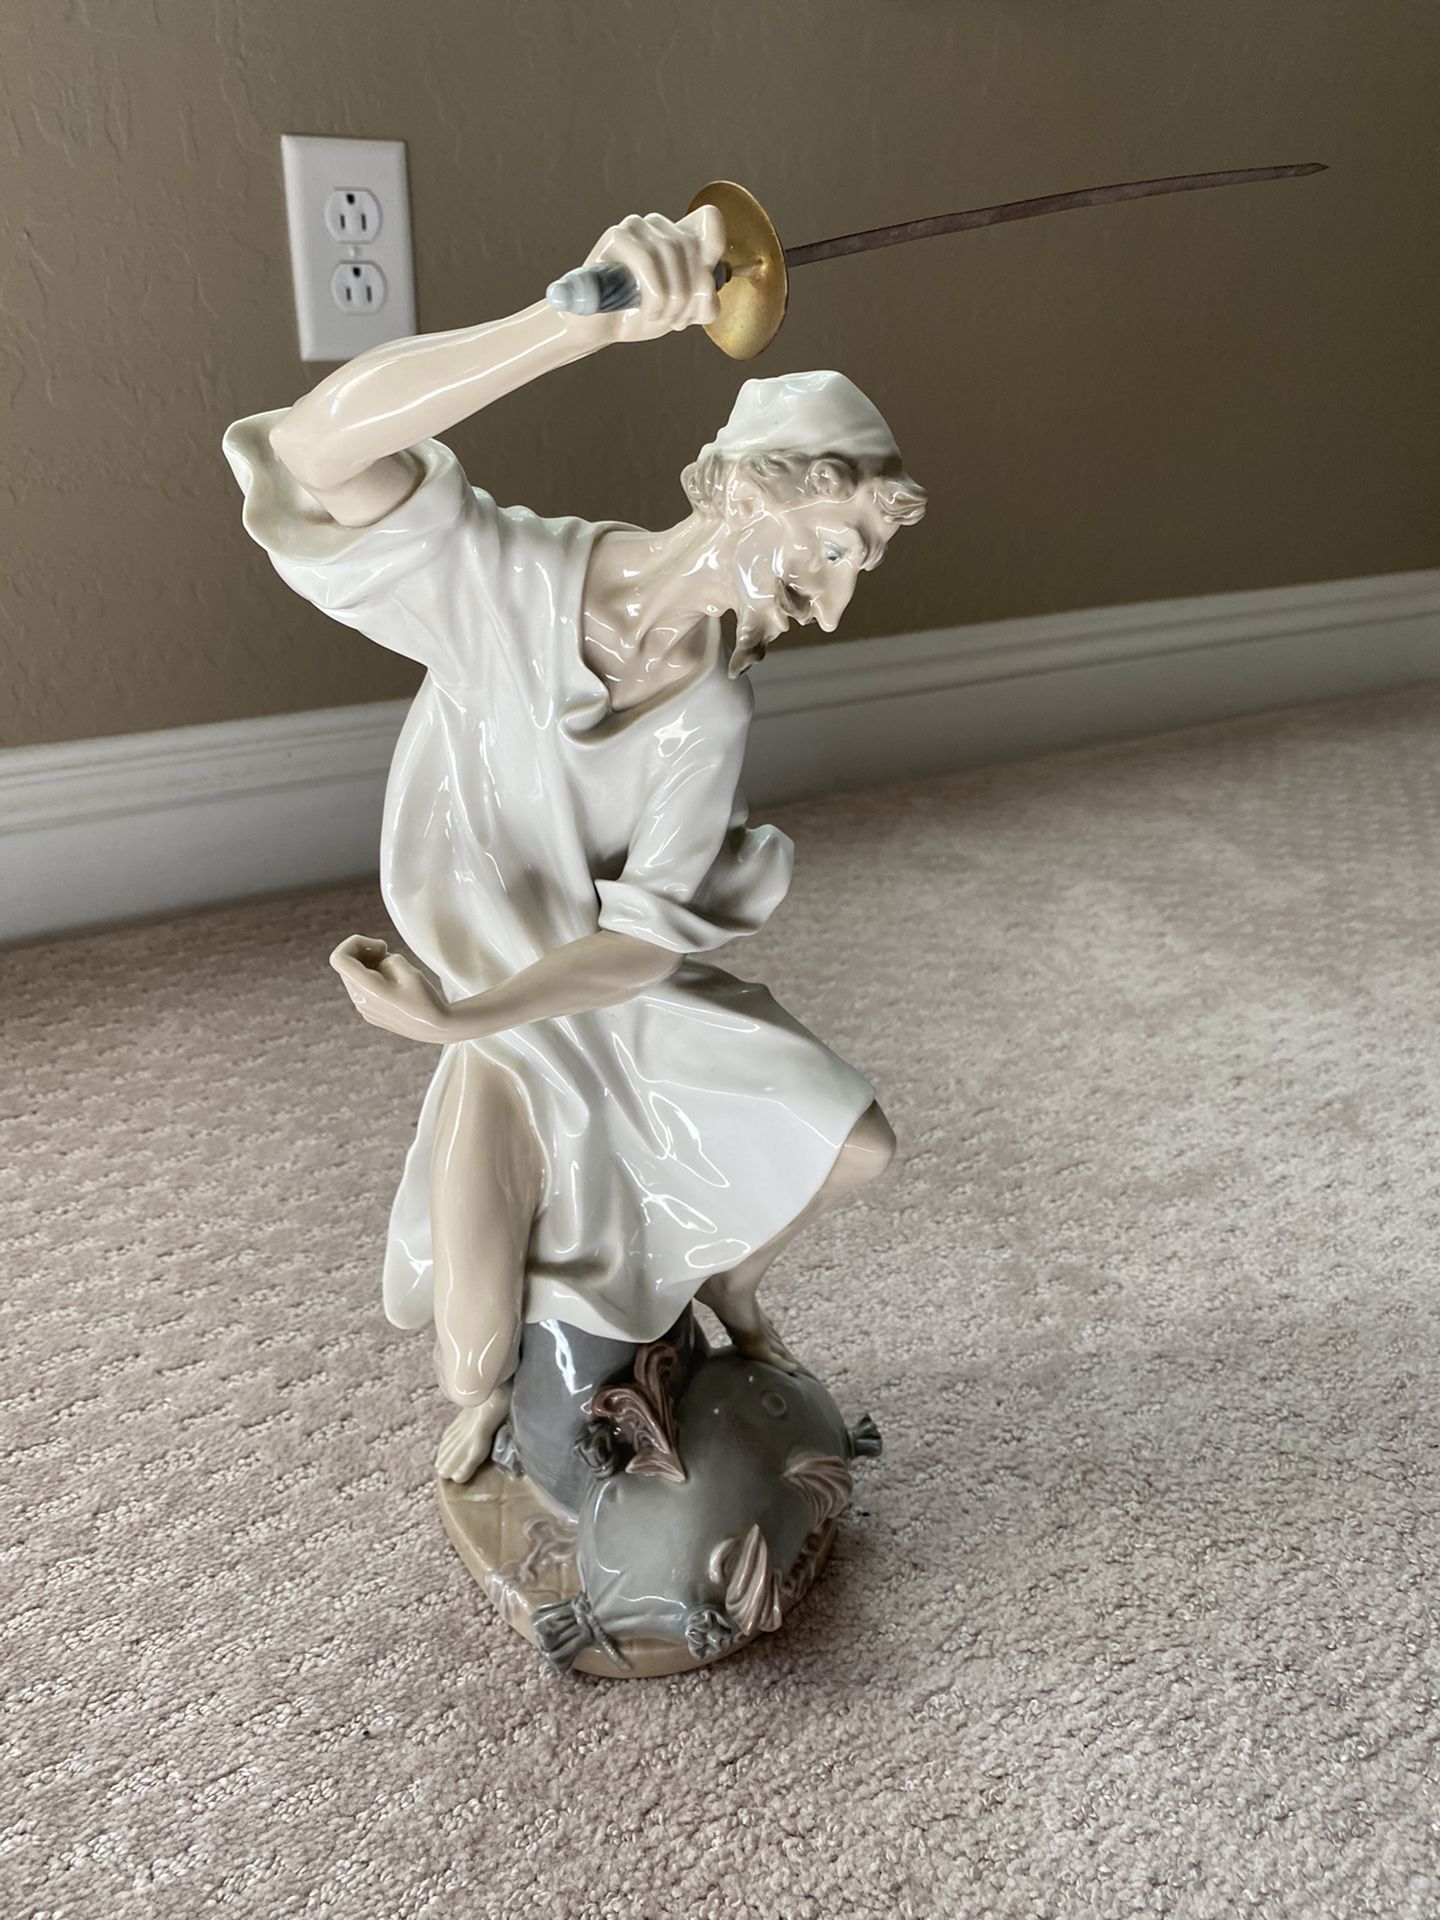 lladro “Wrath of Don Quixote” Porcelain Figurine.